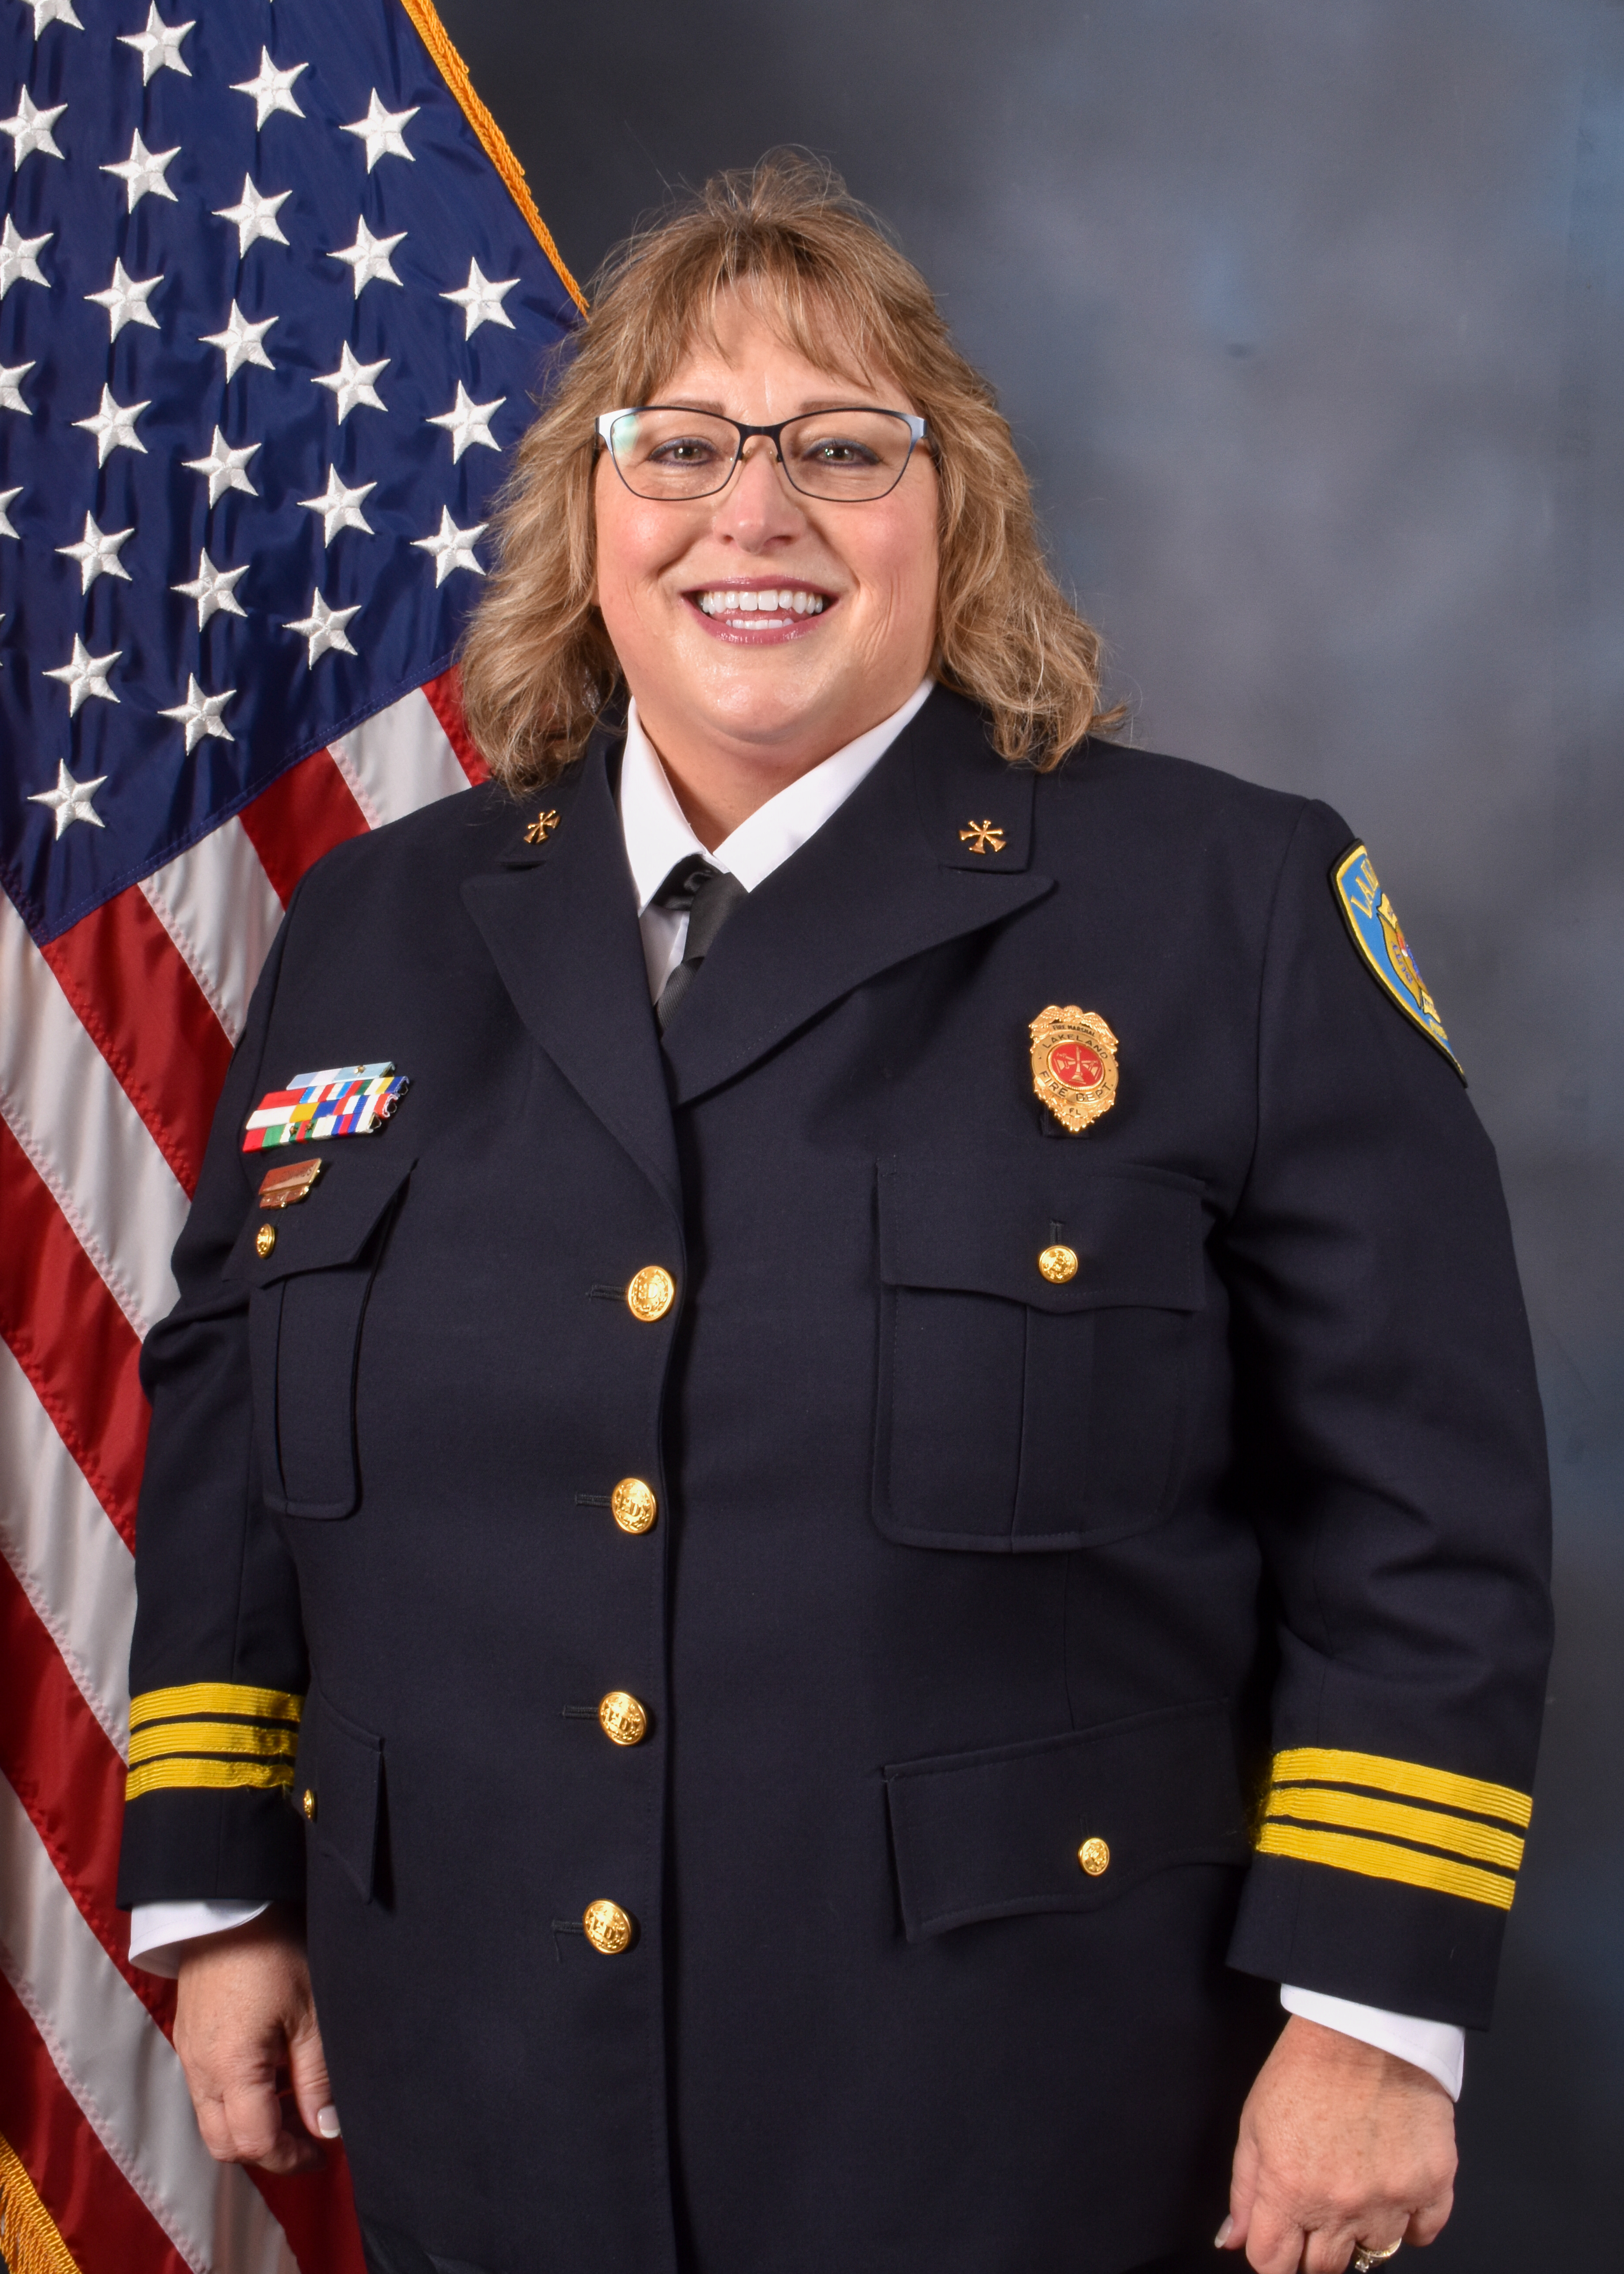 Fire Marshal Cheryl Edwards